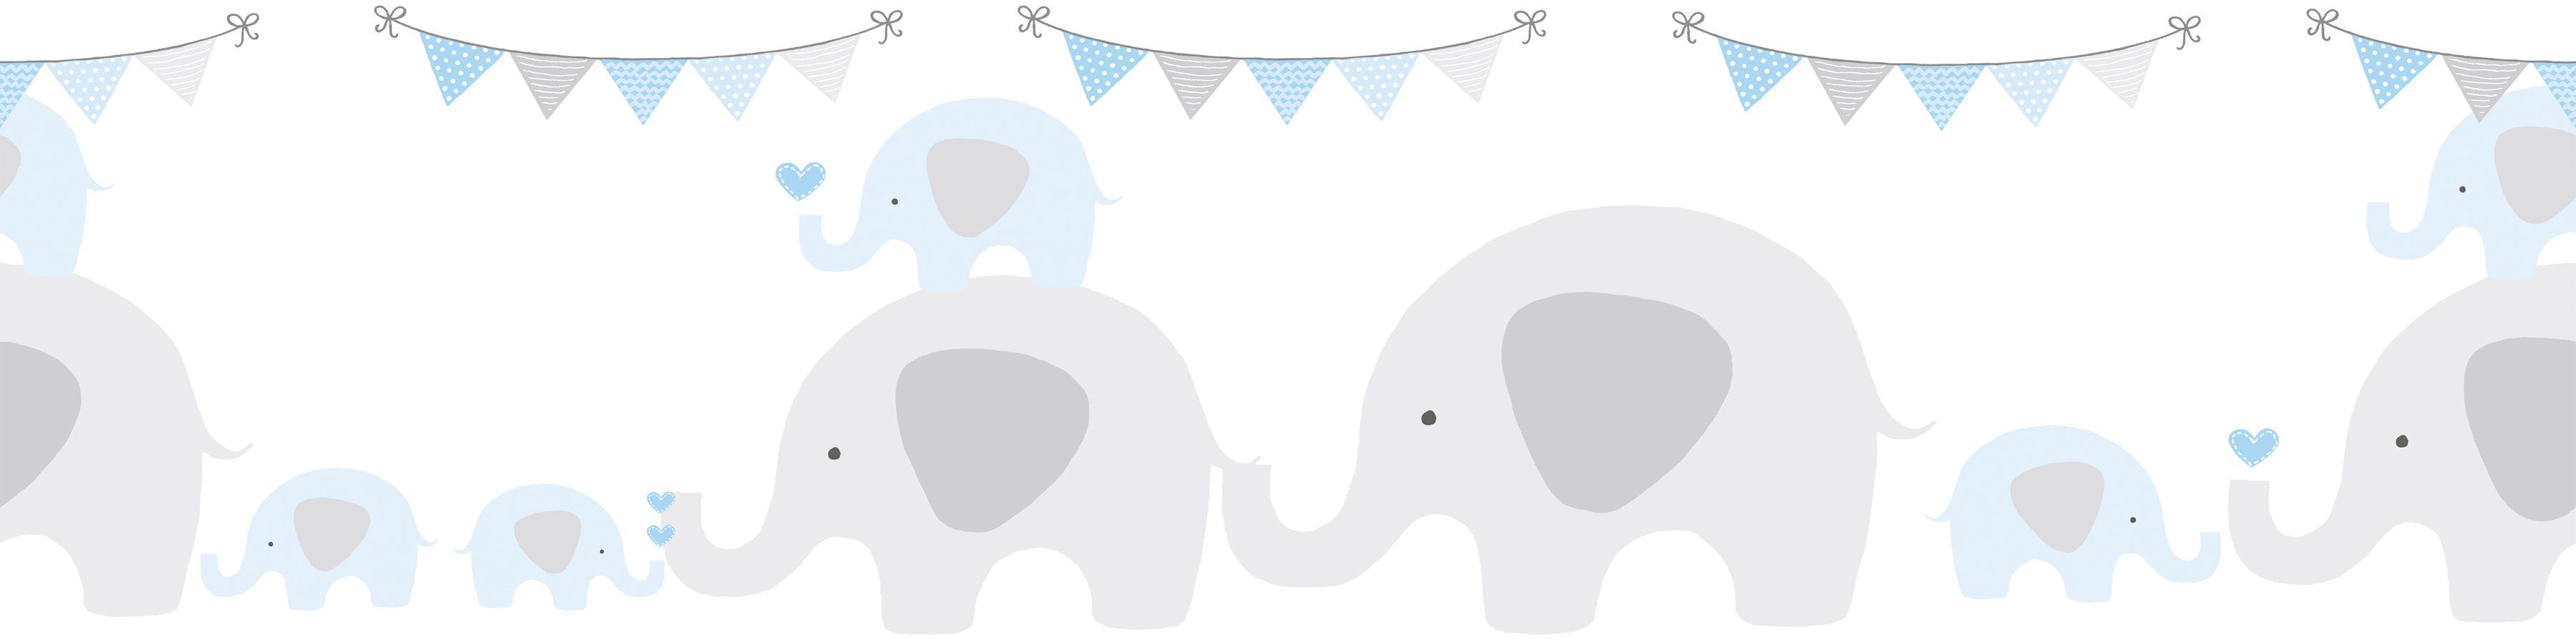 Grau Party, Bordüre glatt, Tapete Création Elephant Kinderzimmer A.S. Blau Weiß